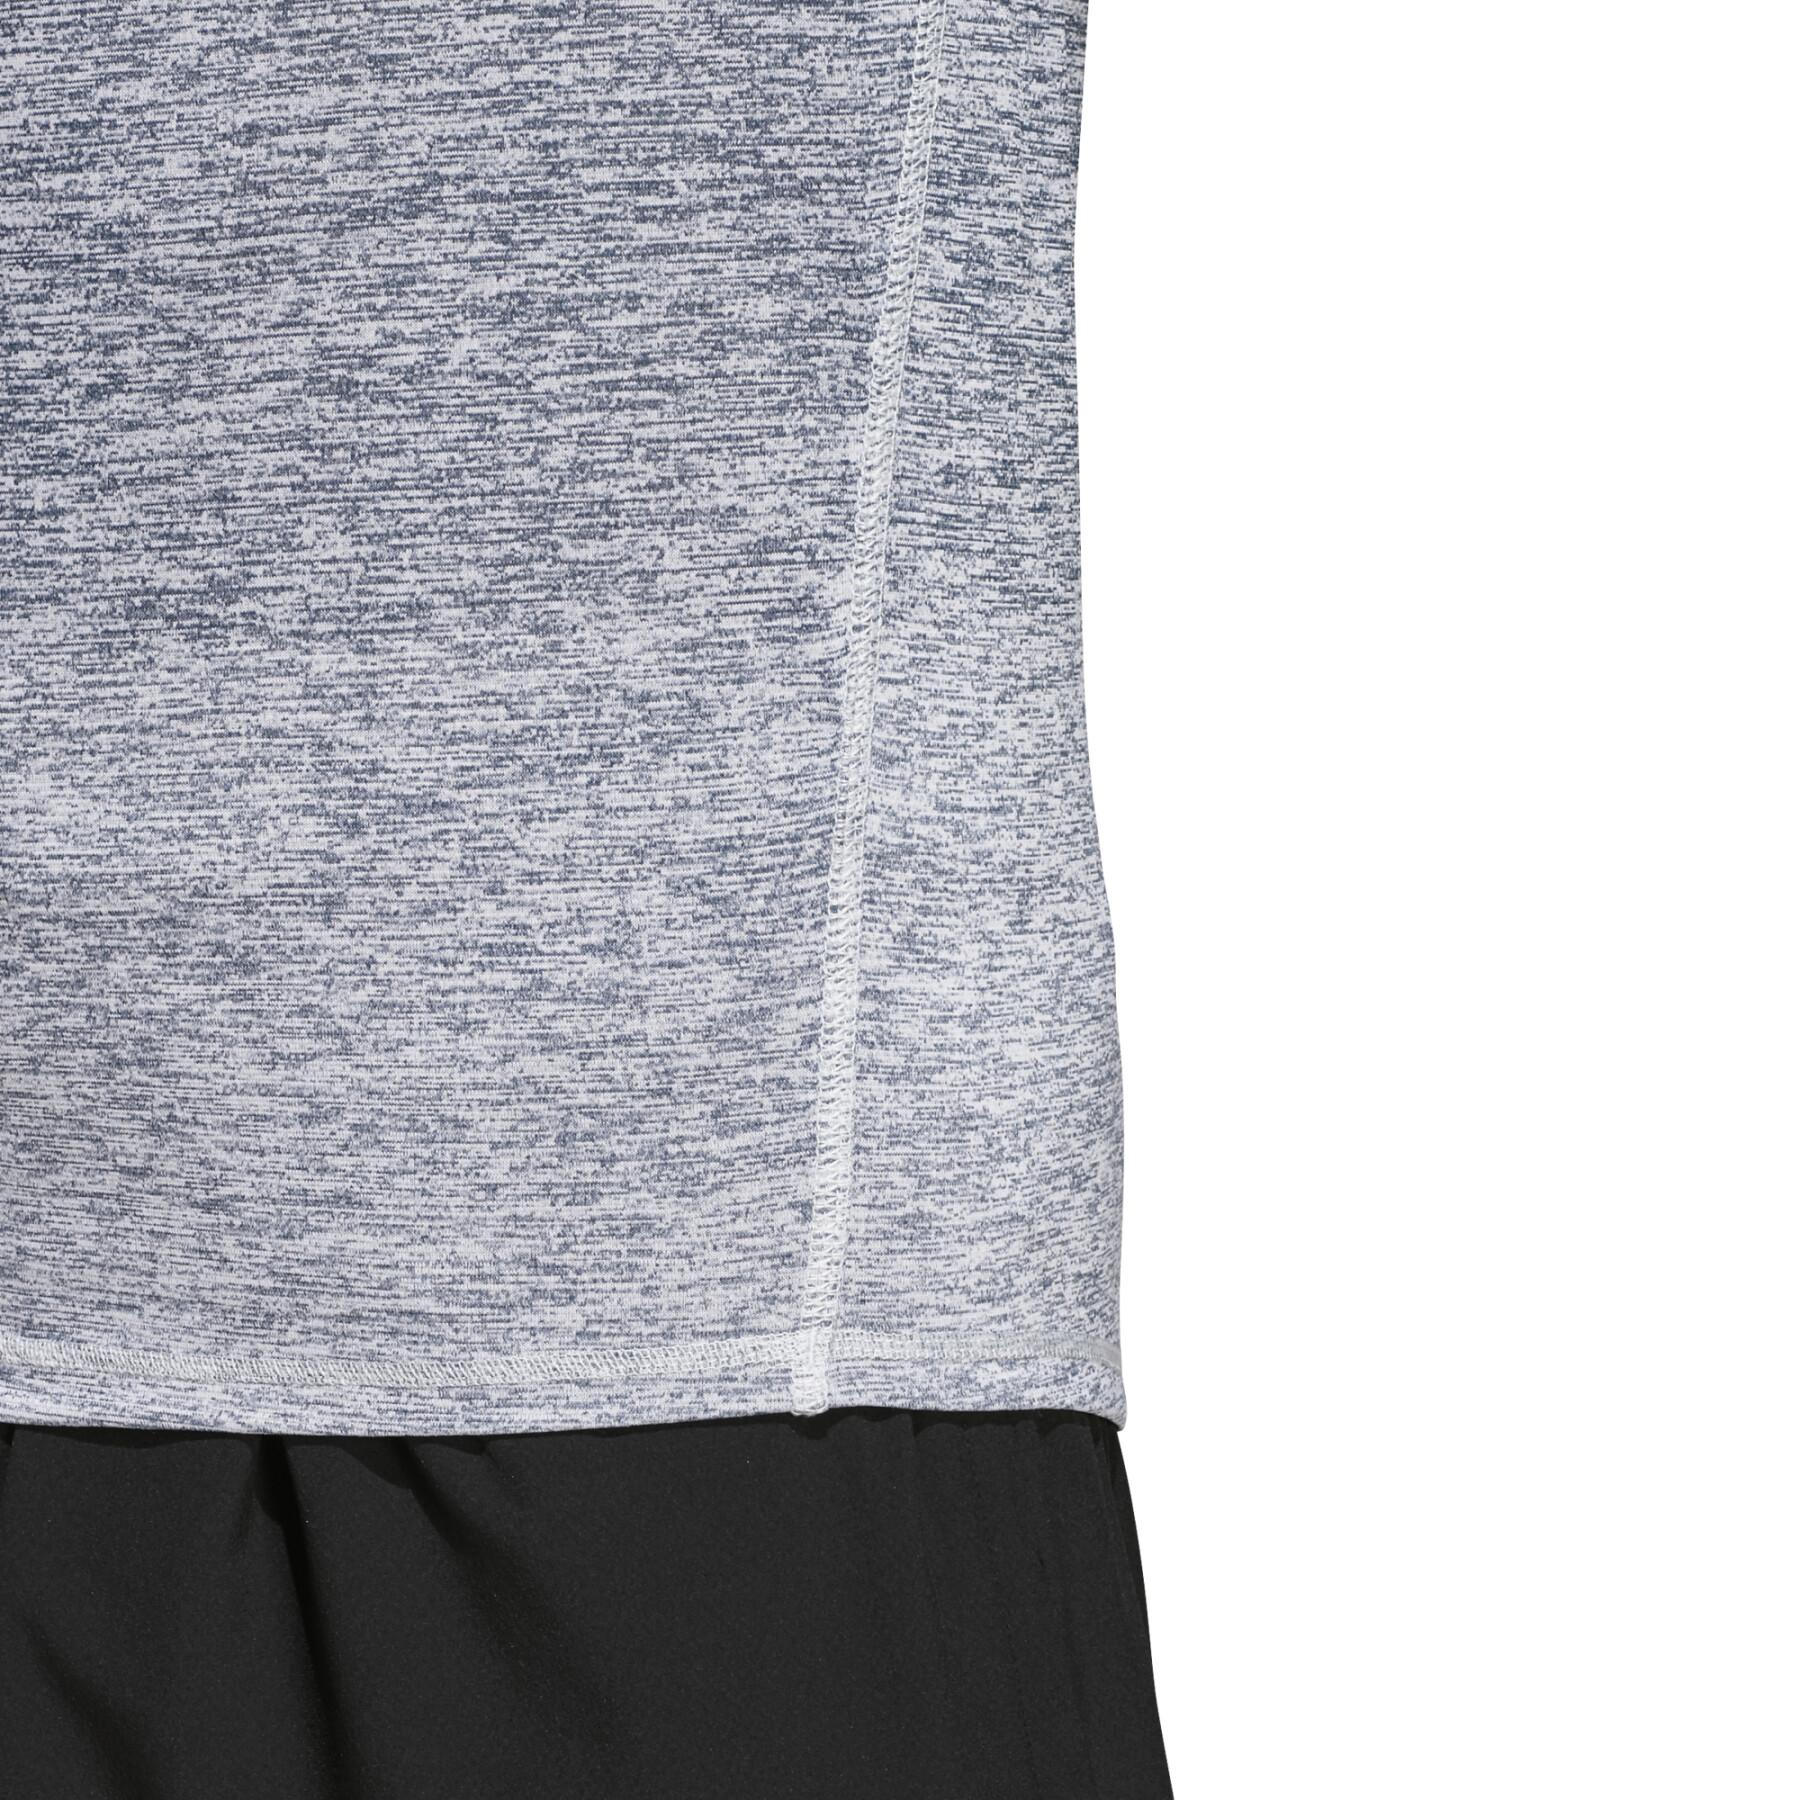 Koszulka adidas FreeLift 360 Gradient Graphic